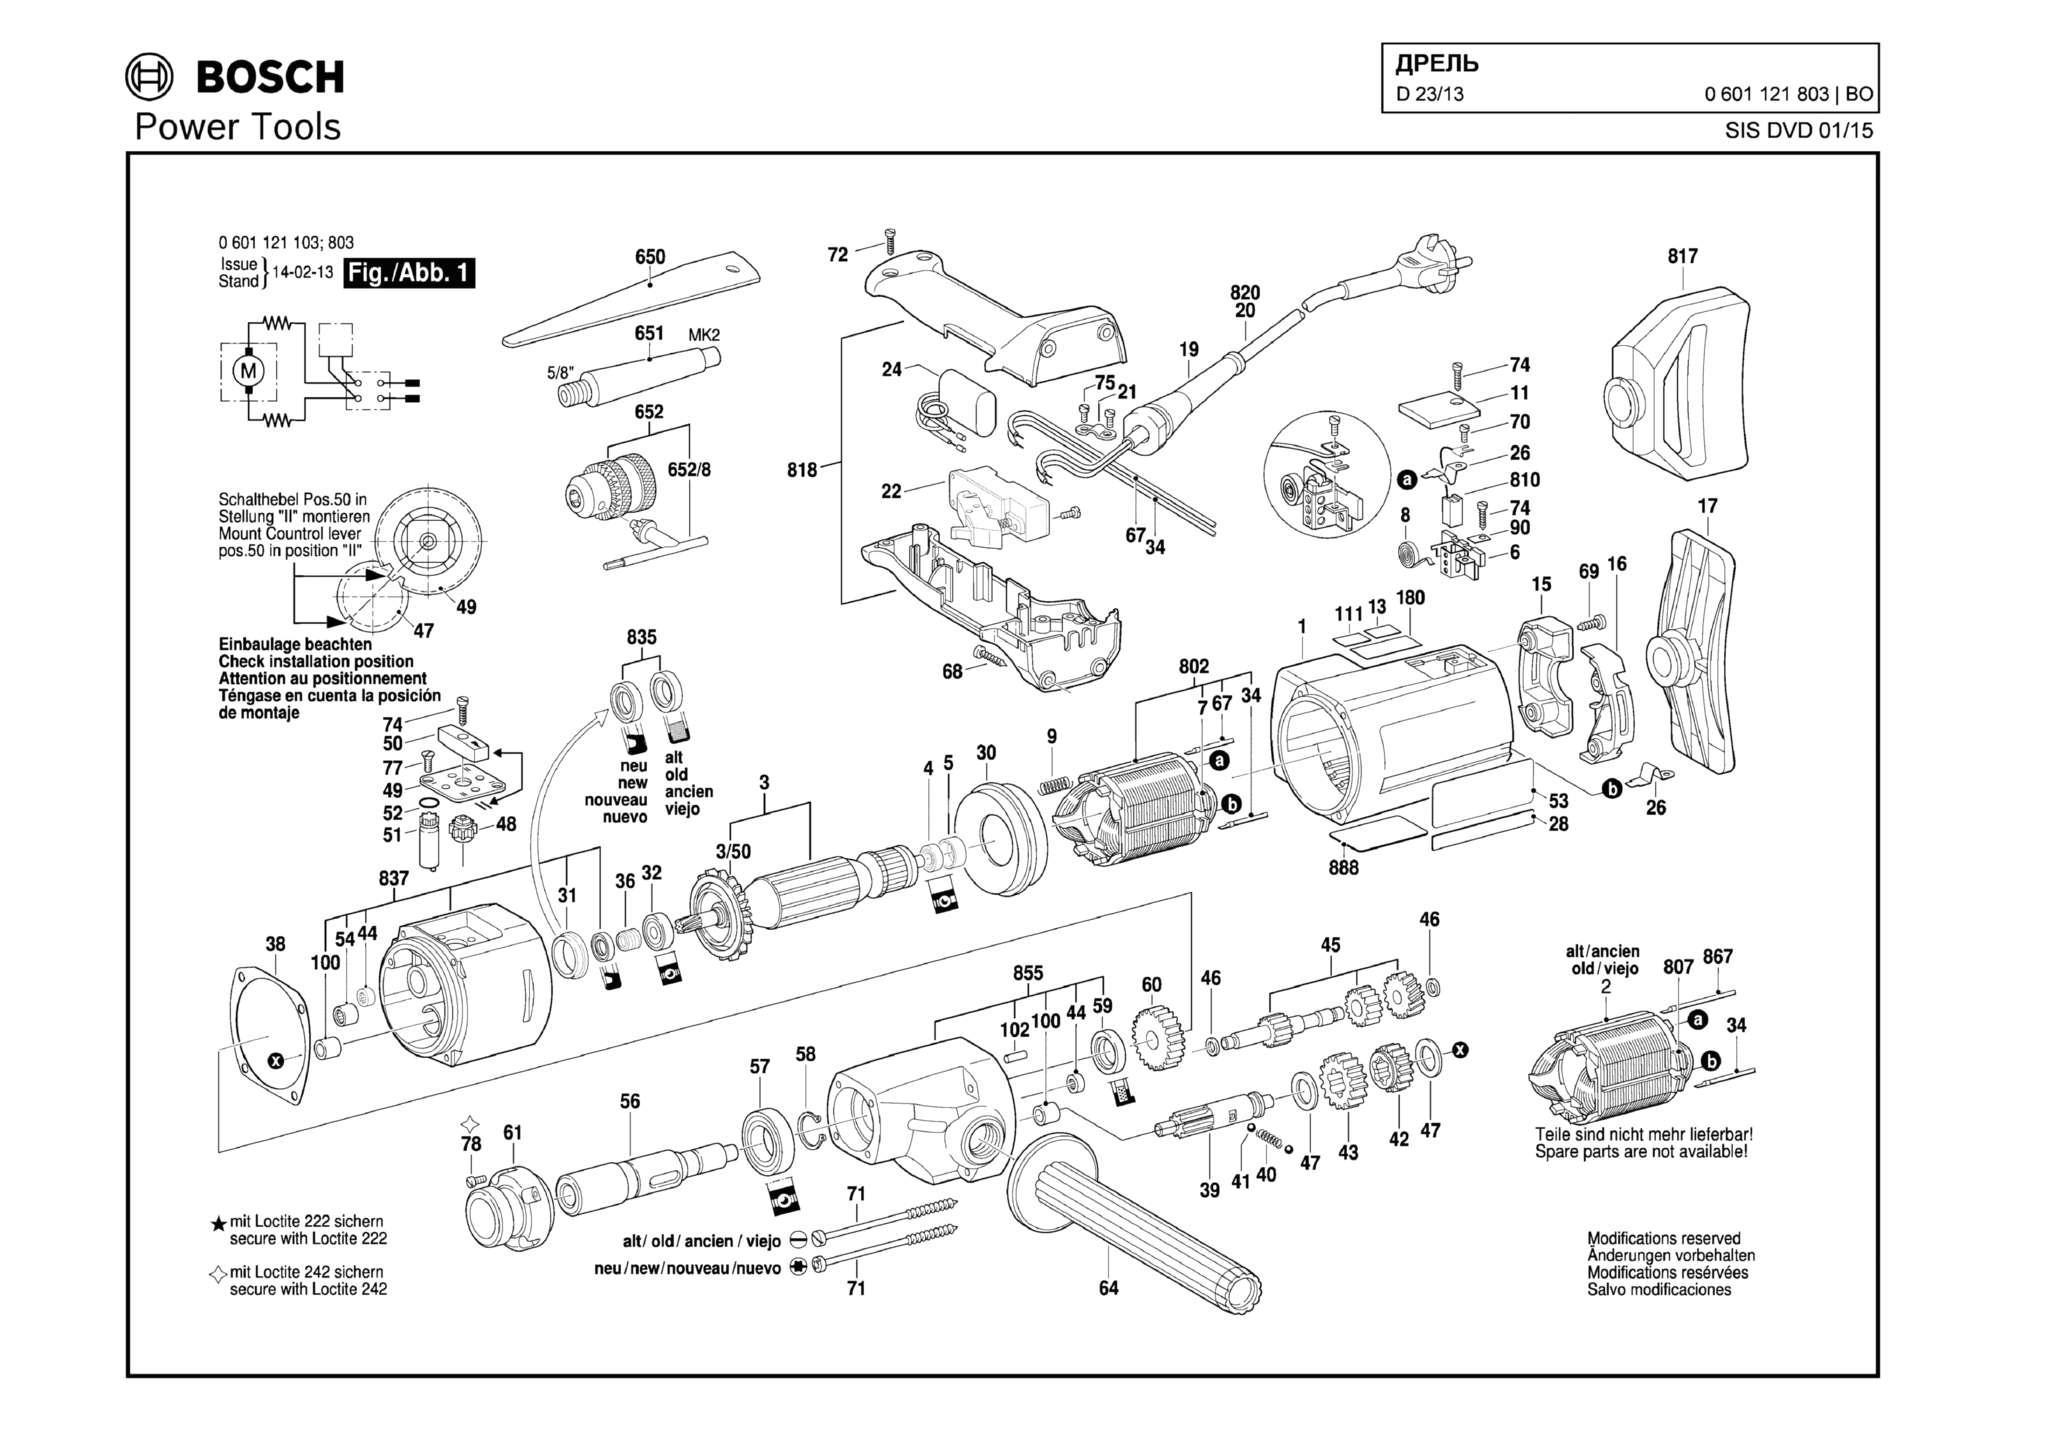 Запчасти, схема и деталировка Bosch D 23/13 (ТИП 0601121803)